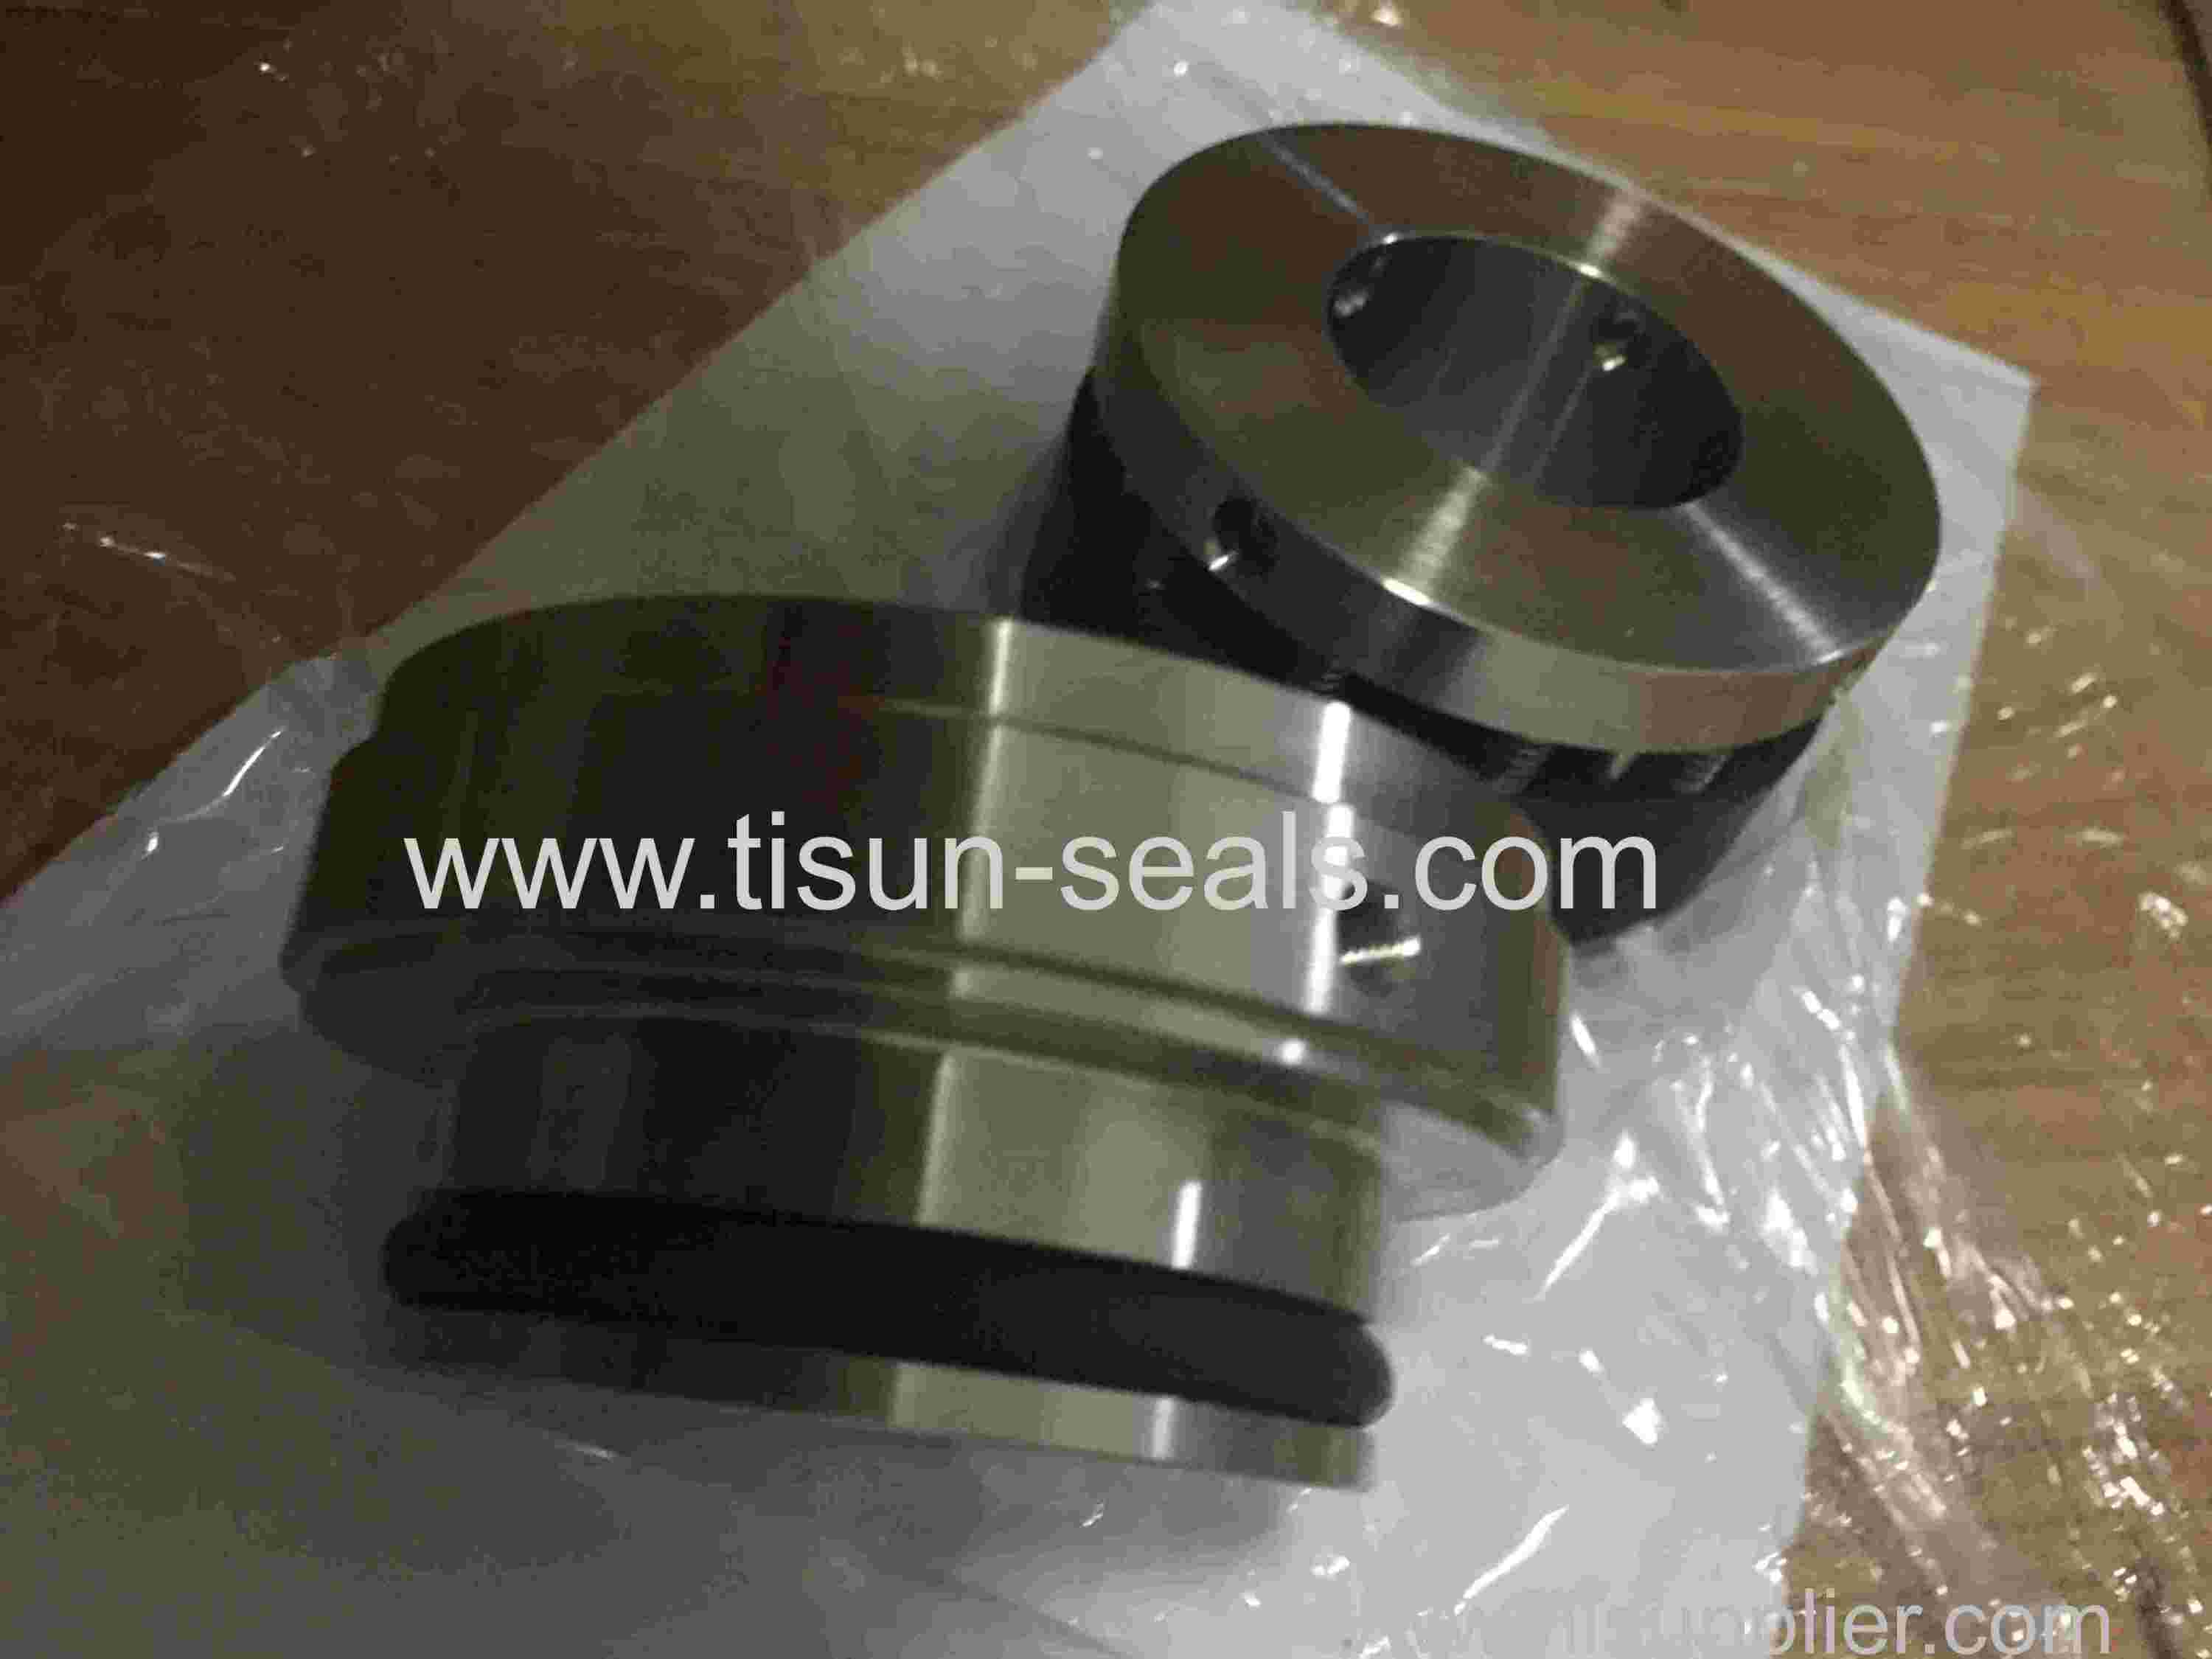 mechanical seals Introduction